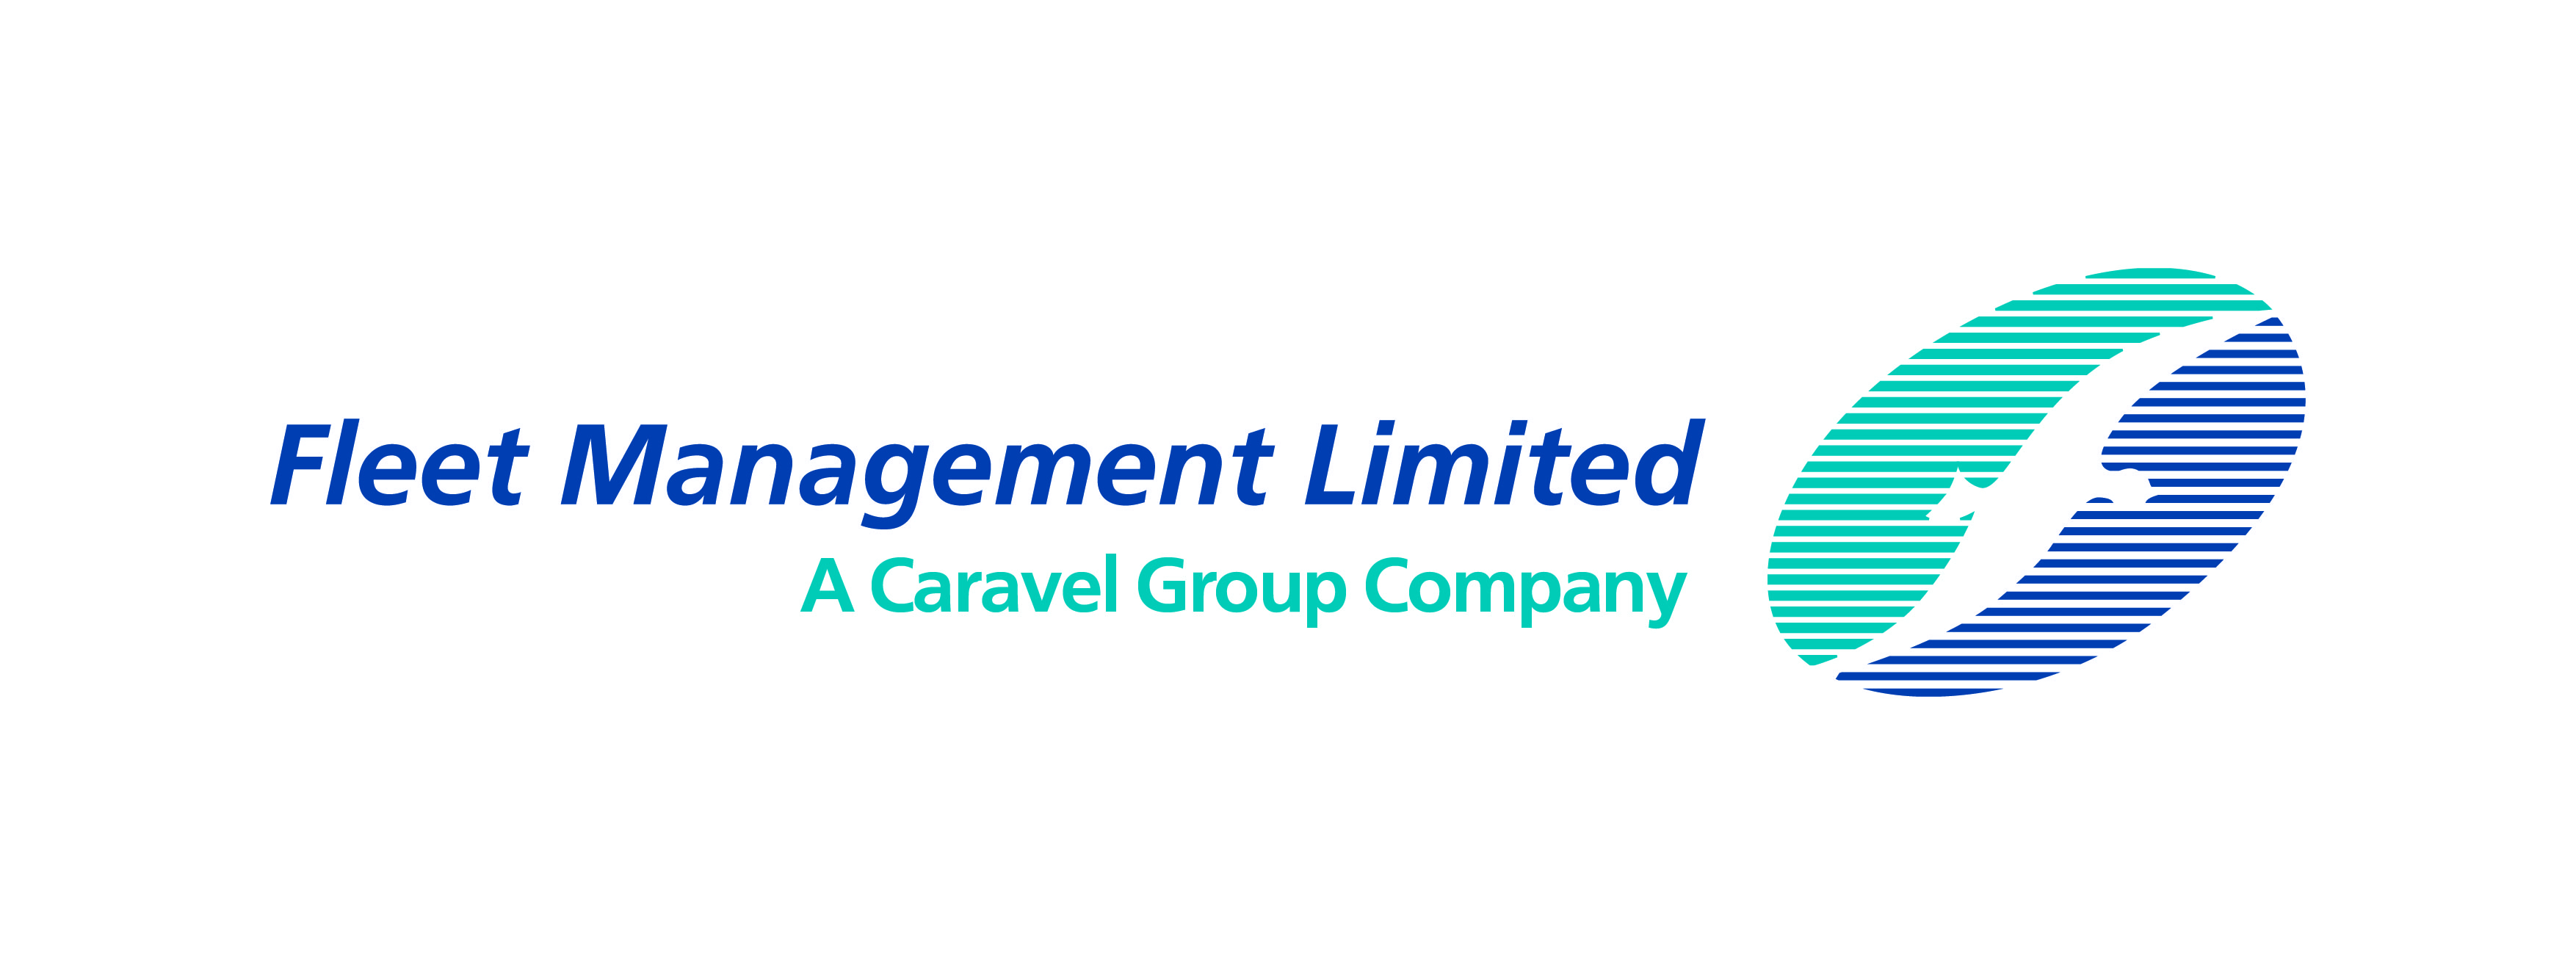 Fleet Management Limited